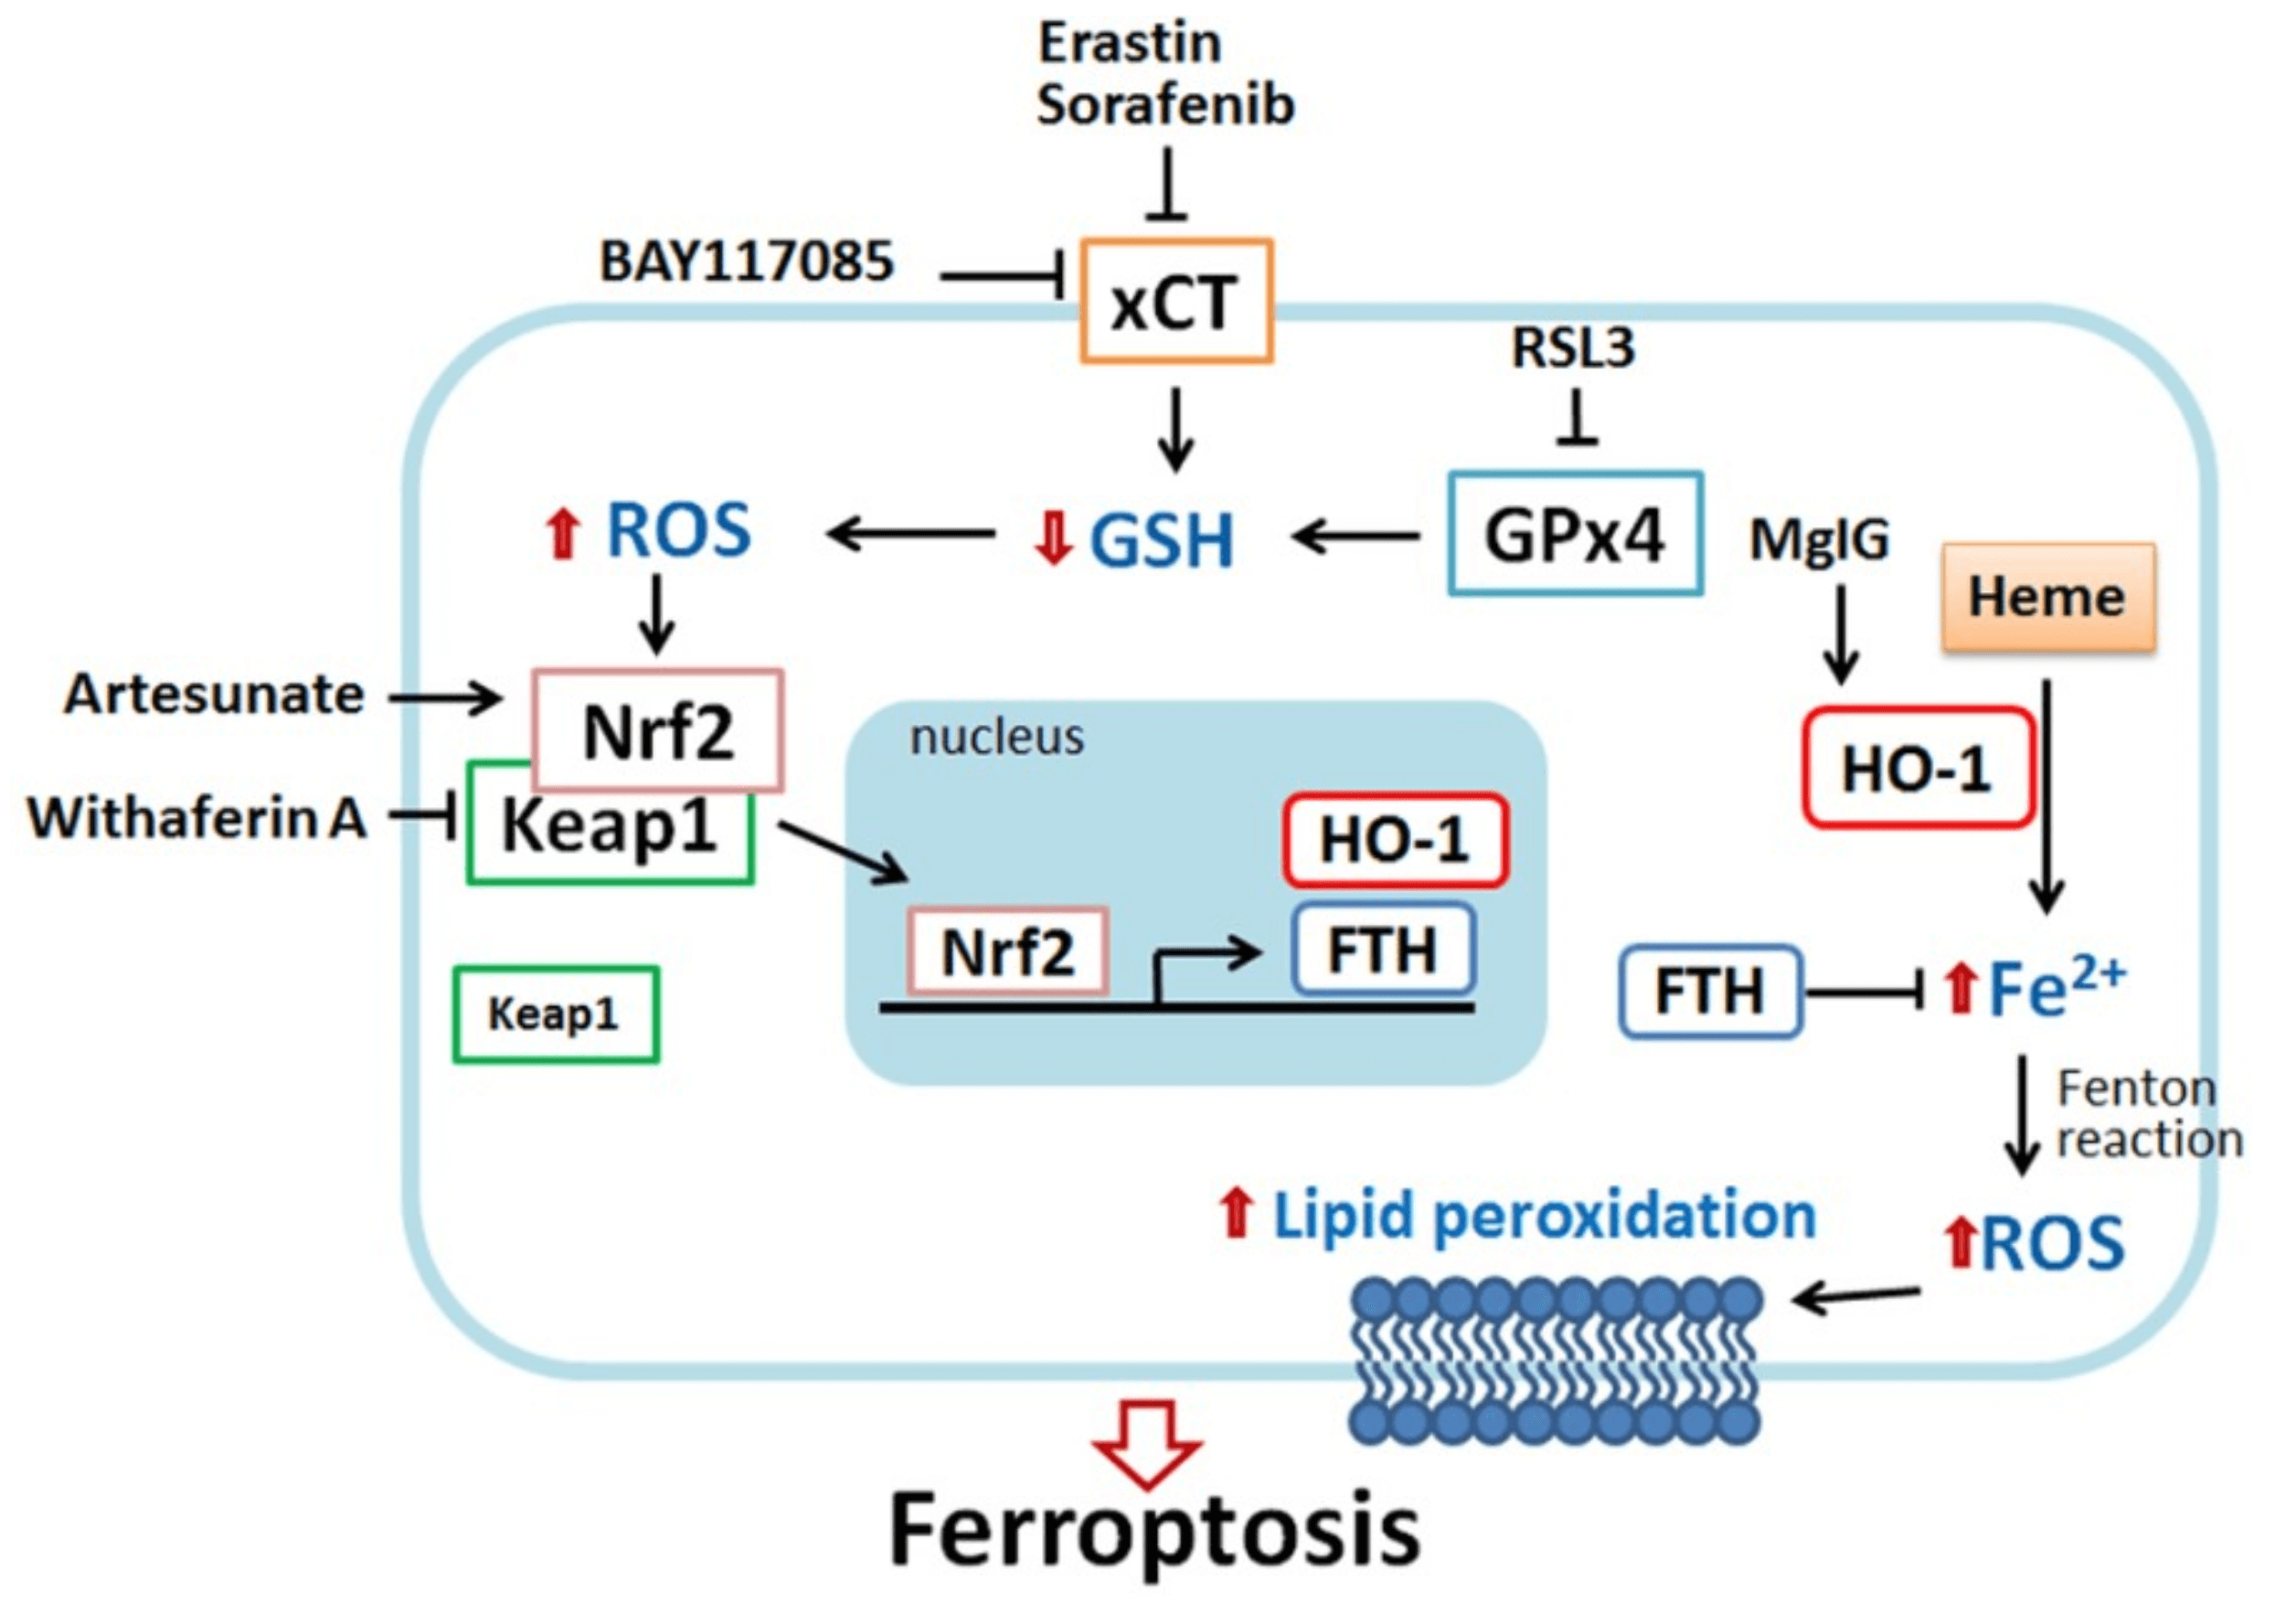 Role of HO-1 in ferroptosis (HO) reaction.